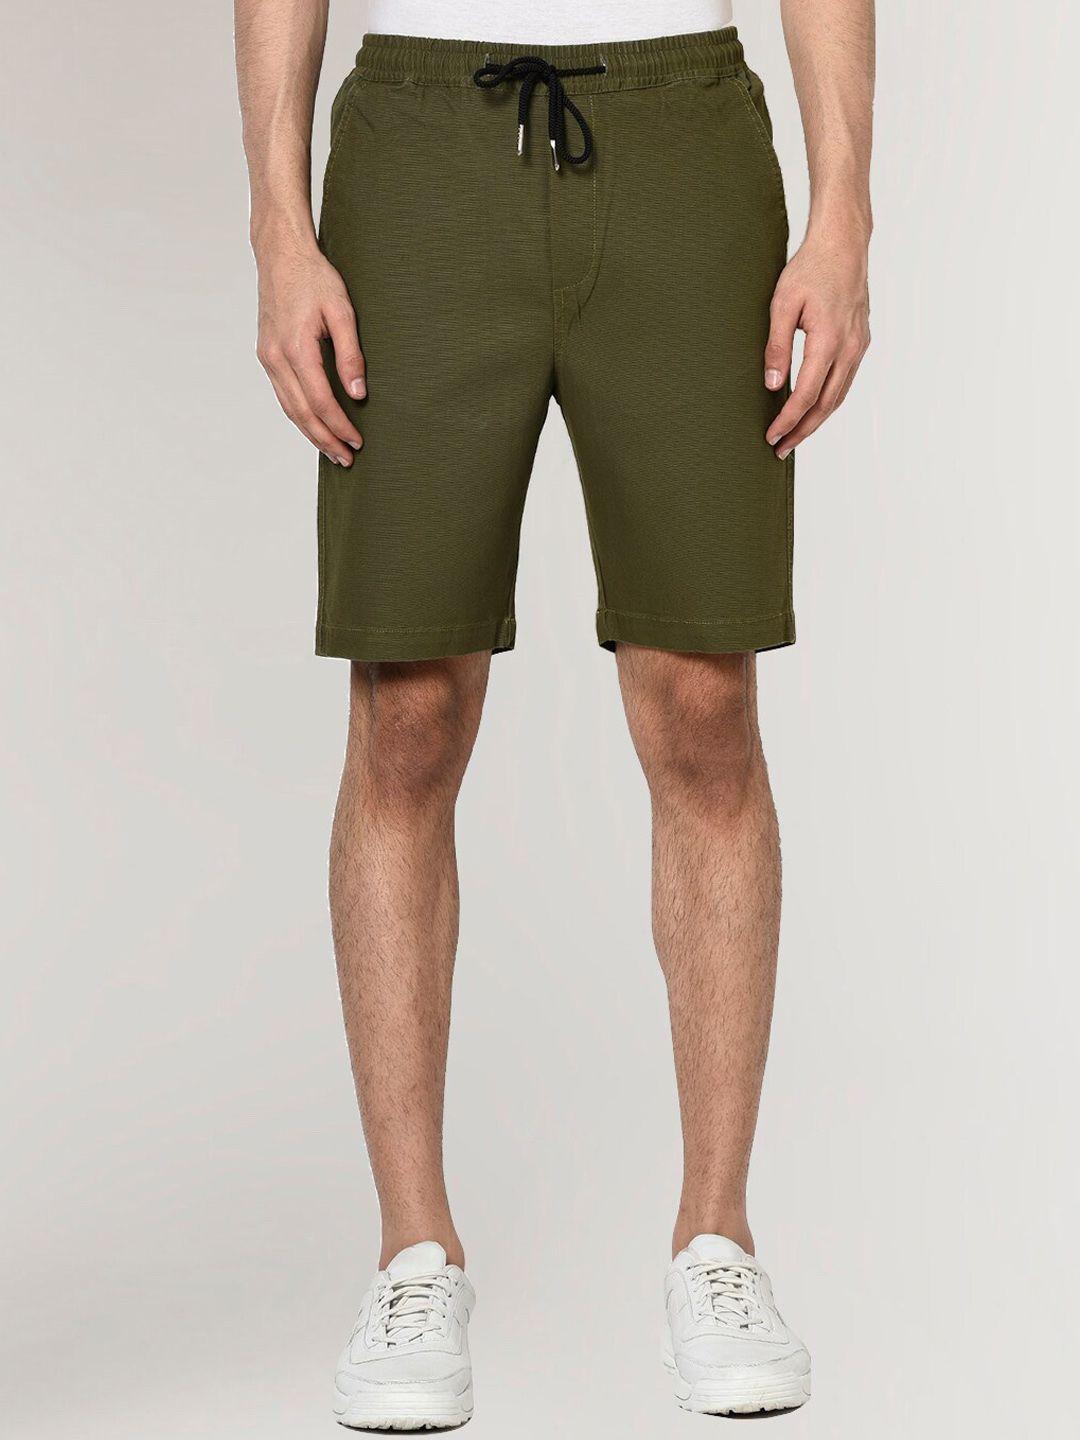 peppyzone men cotton shorts